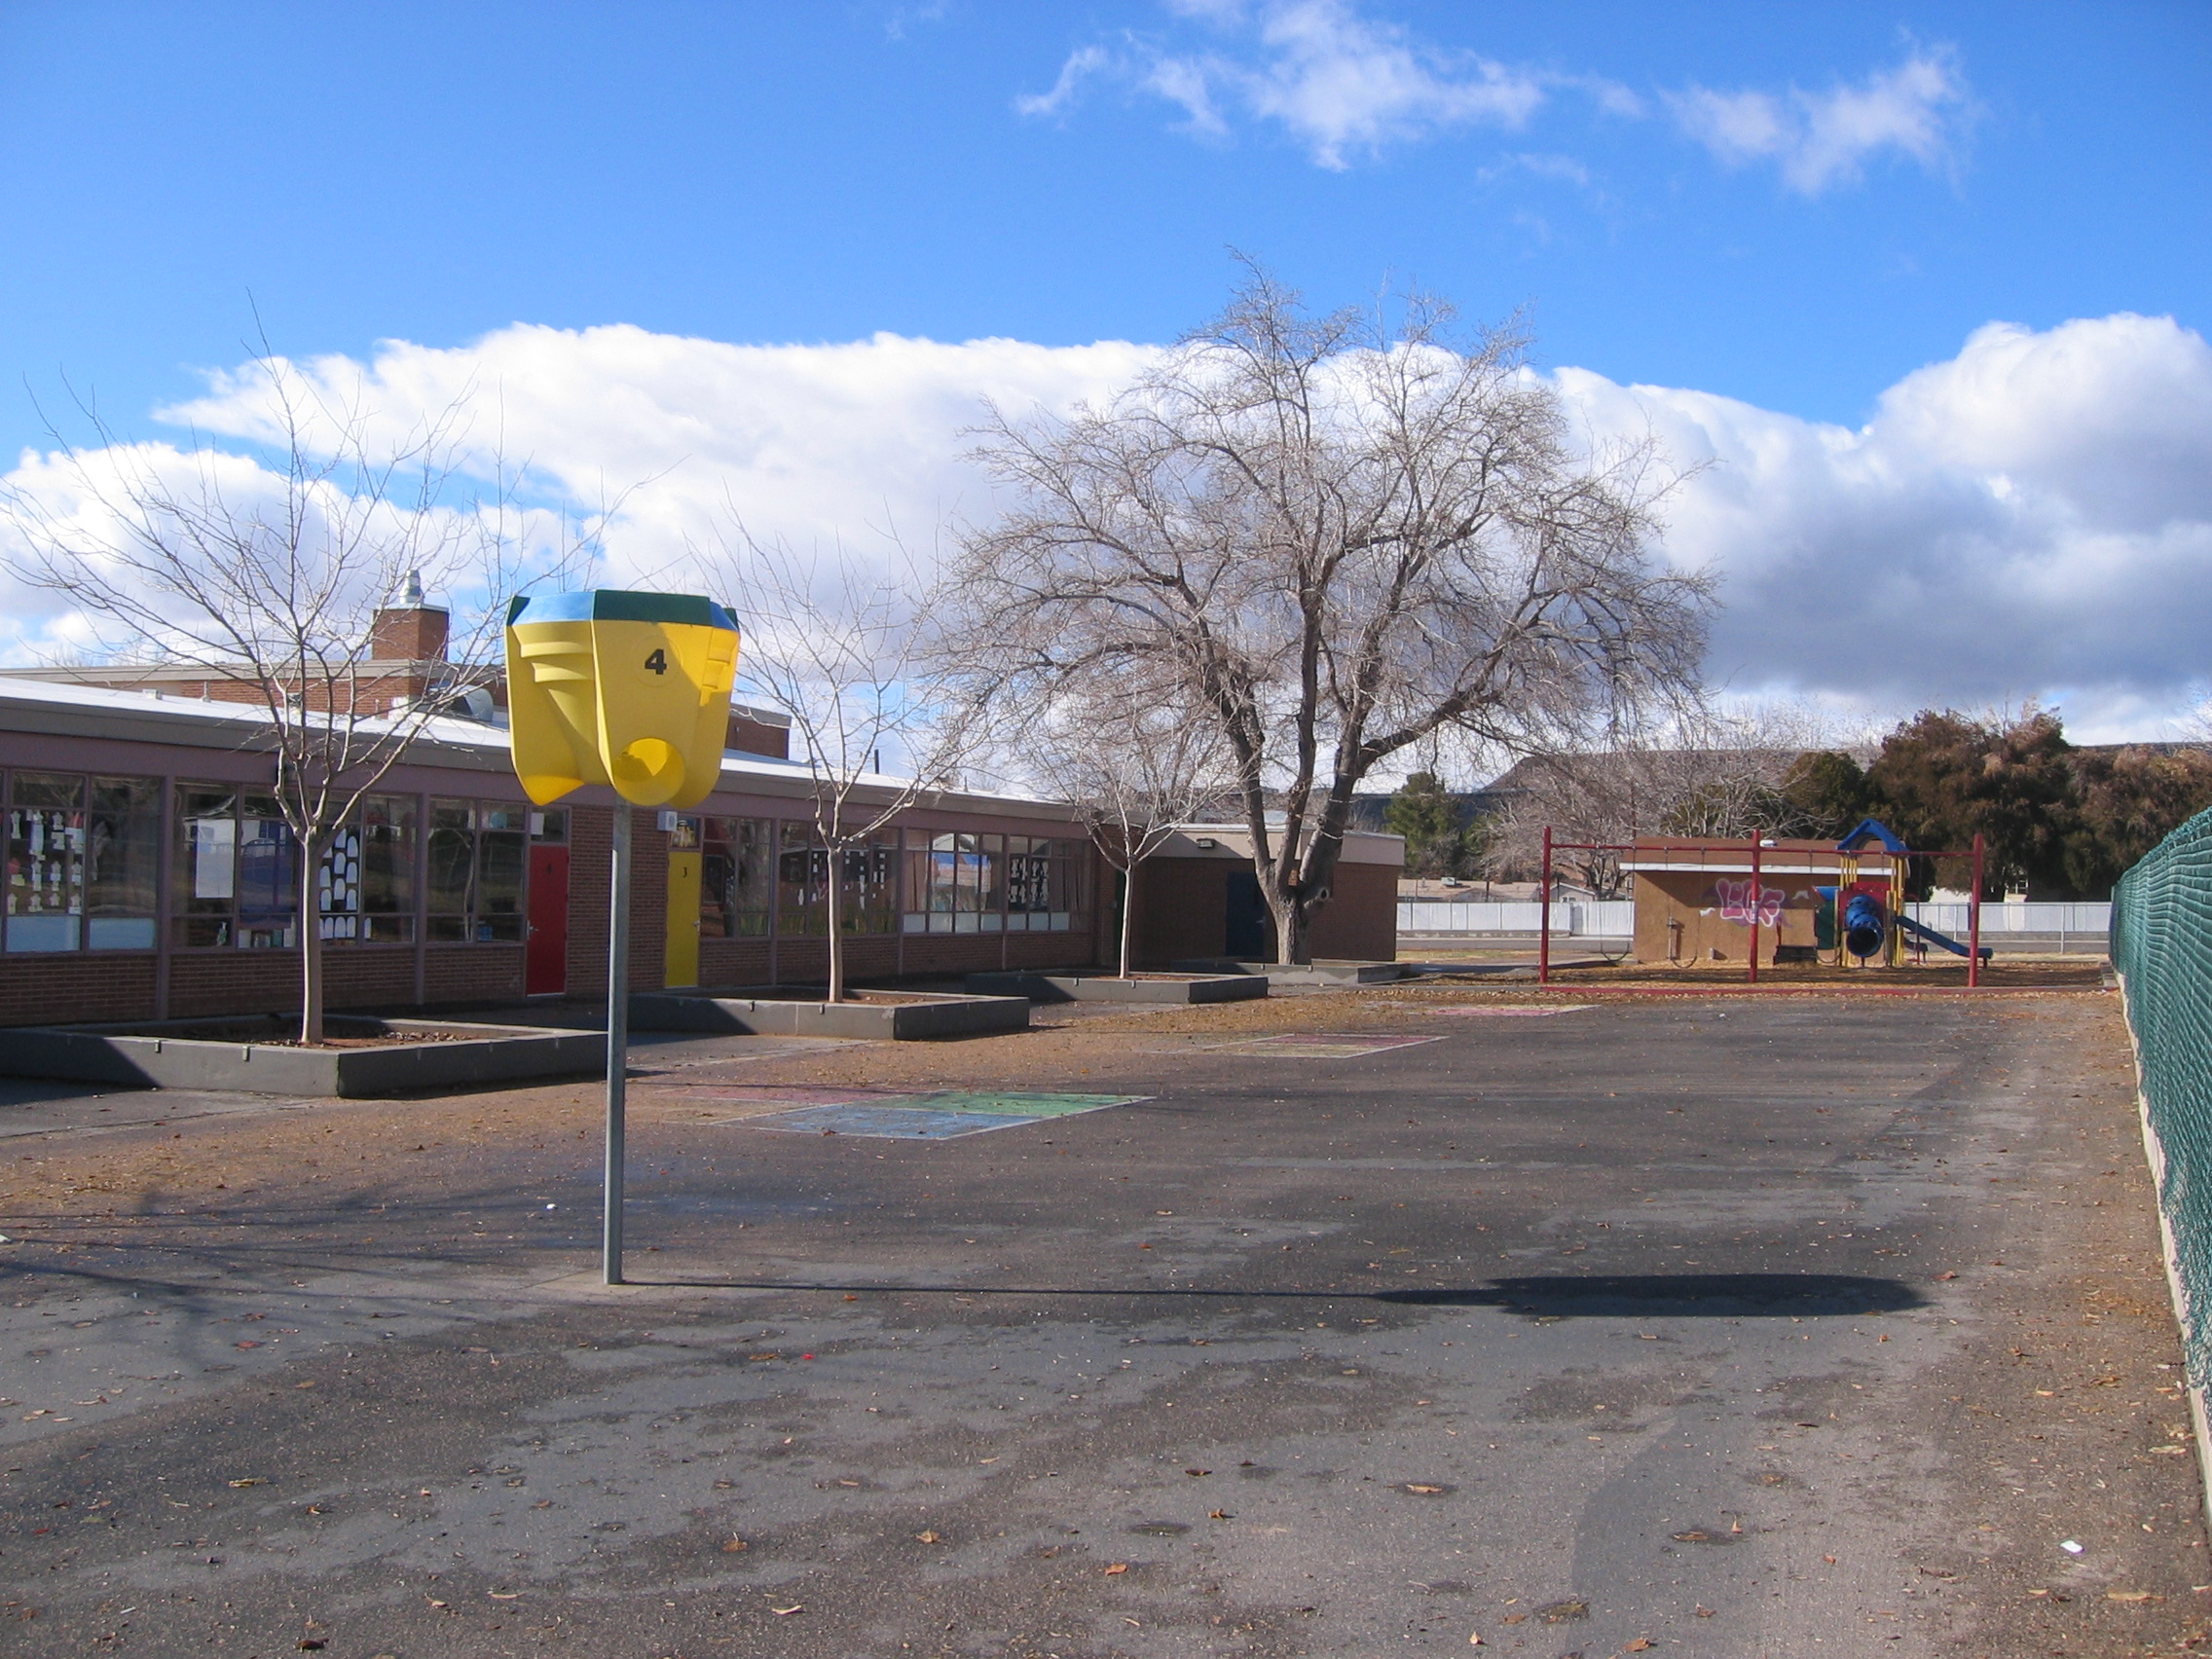 North side of East Elementary School